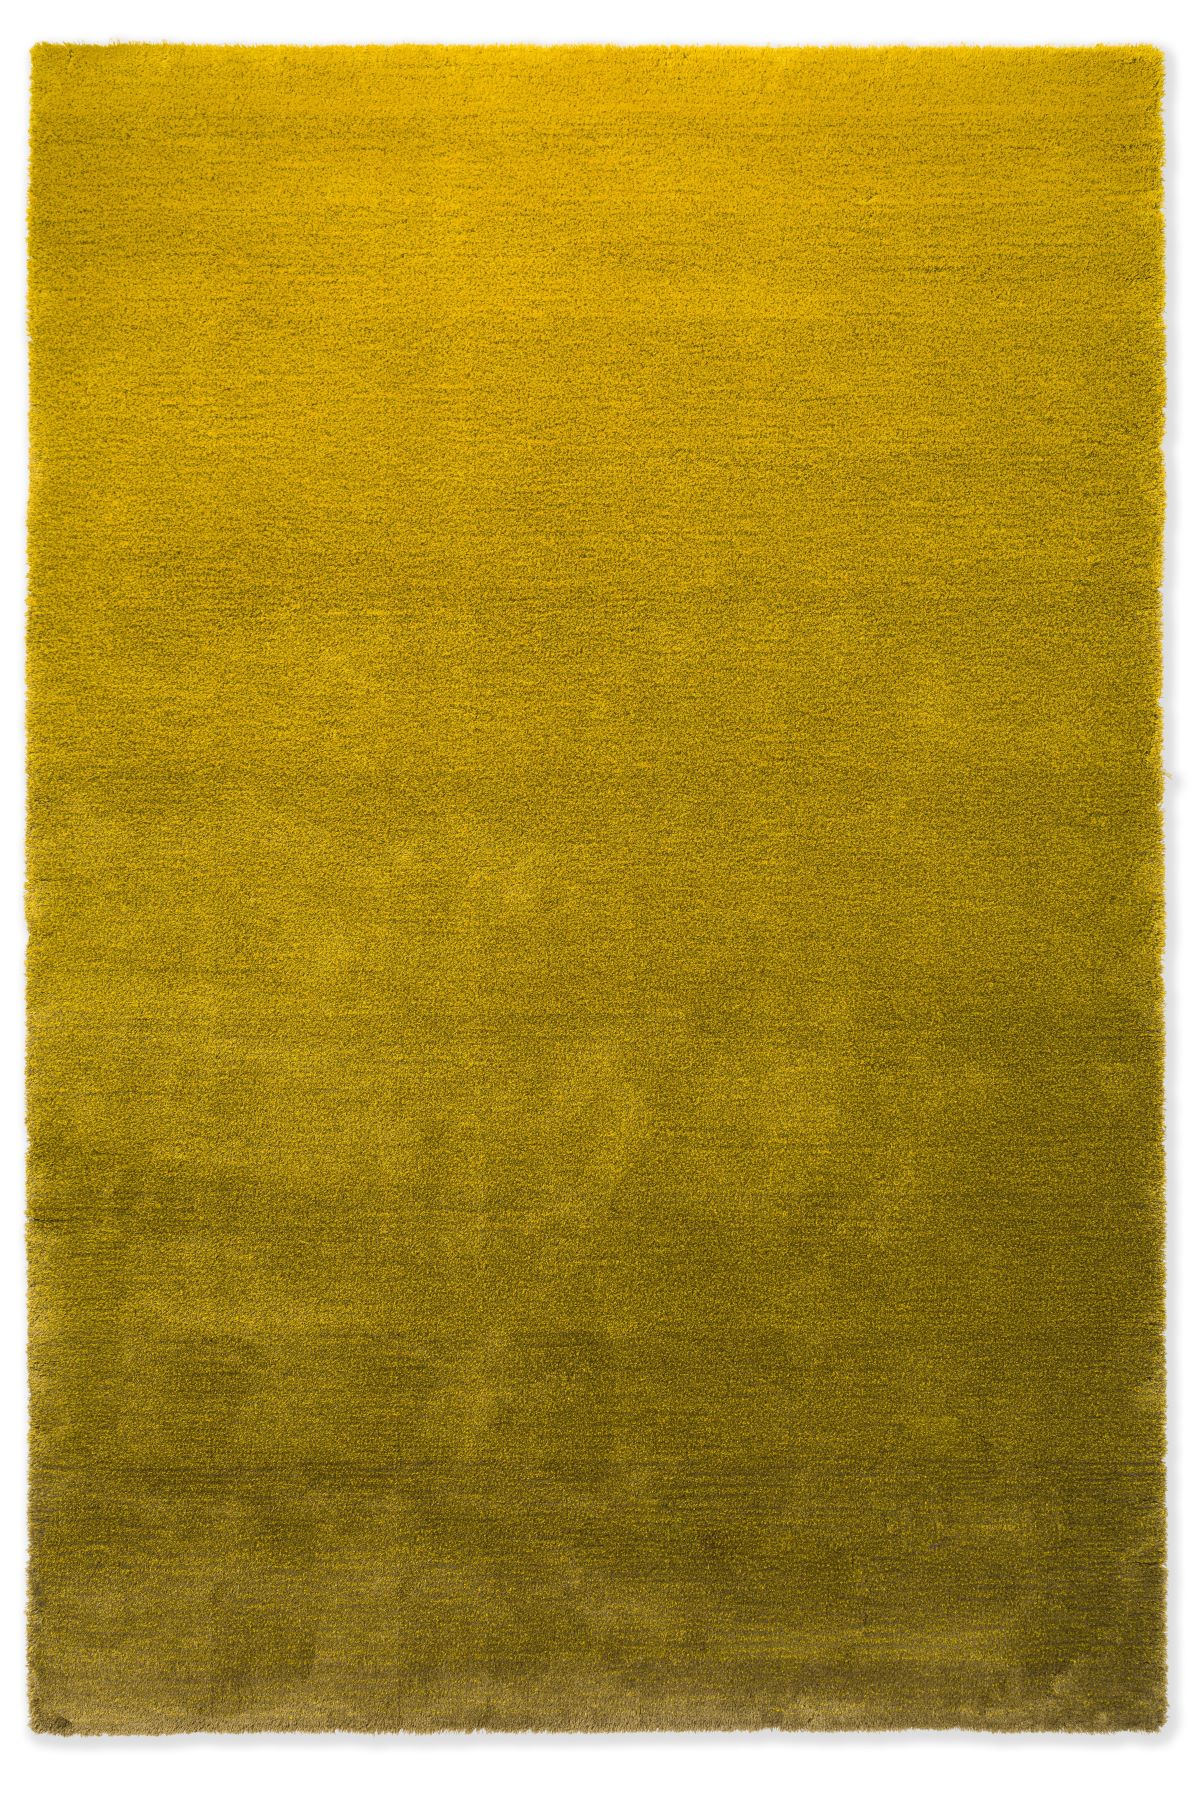 brink-and-campman-rug-shade-low-lemon-gold-010106